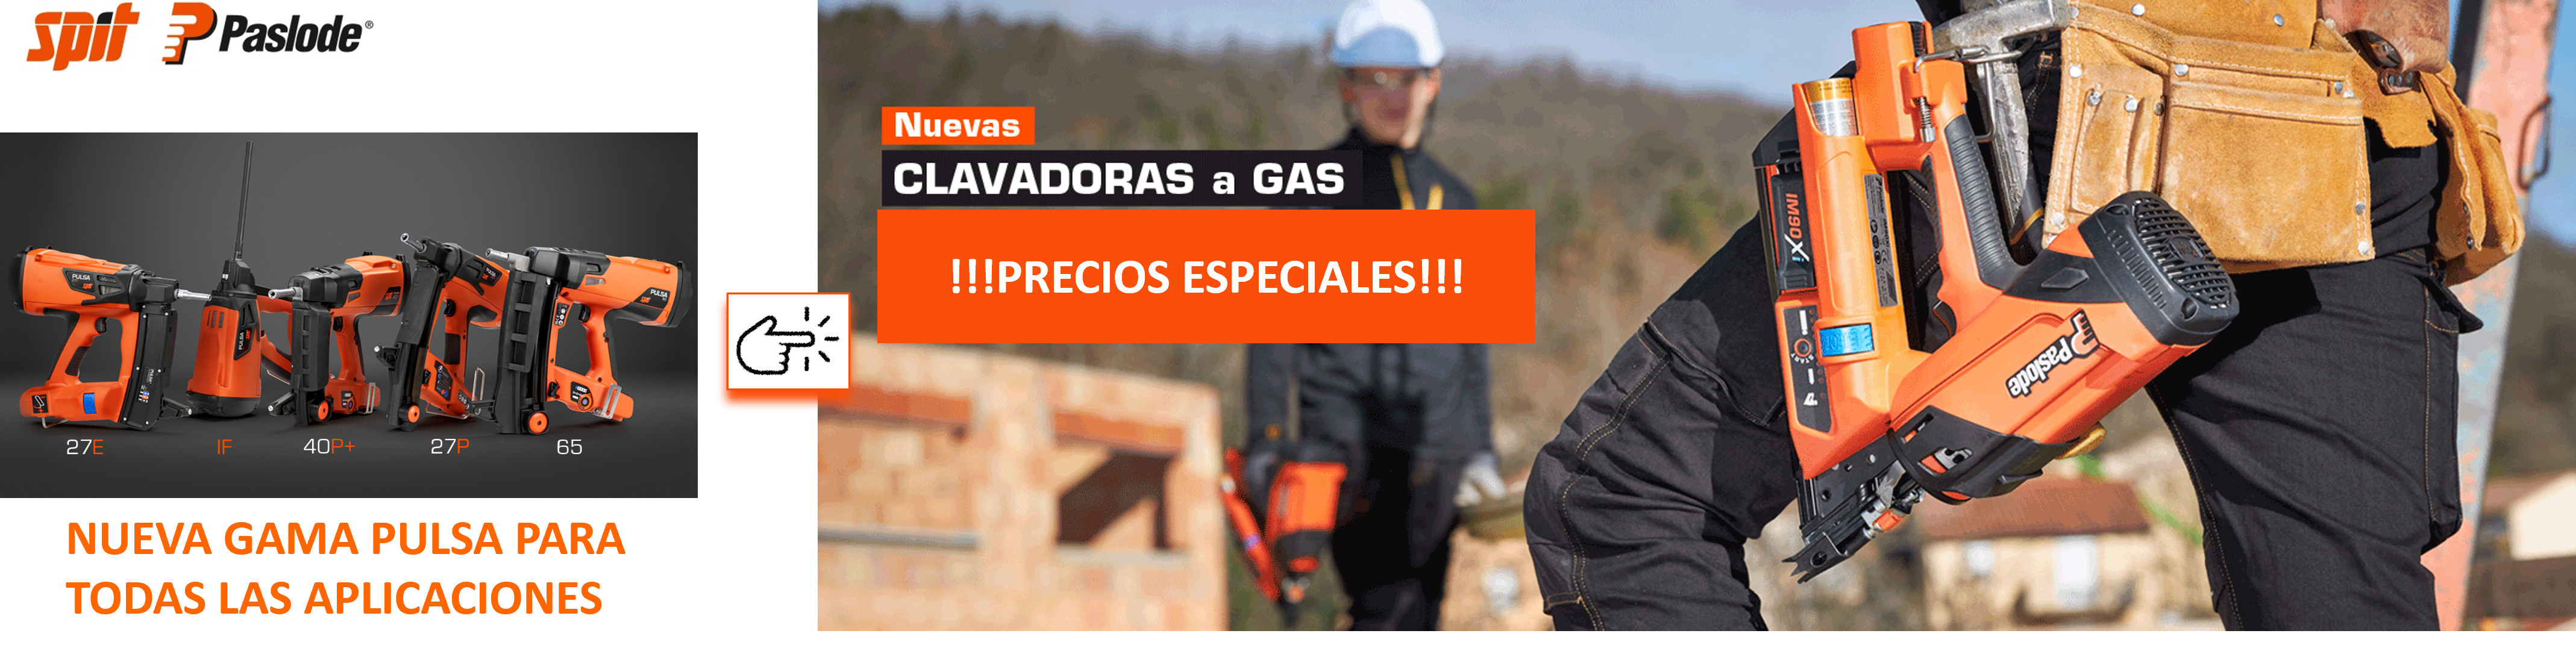 CATALOGO CLAVADORAS A GAS